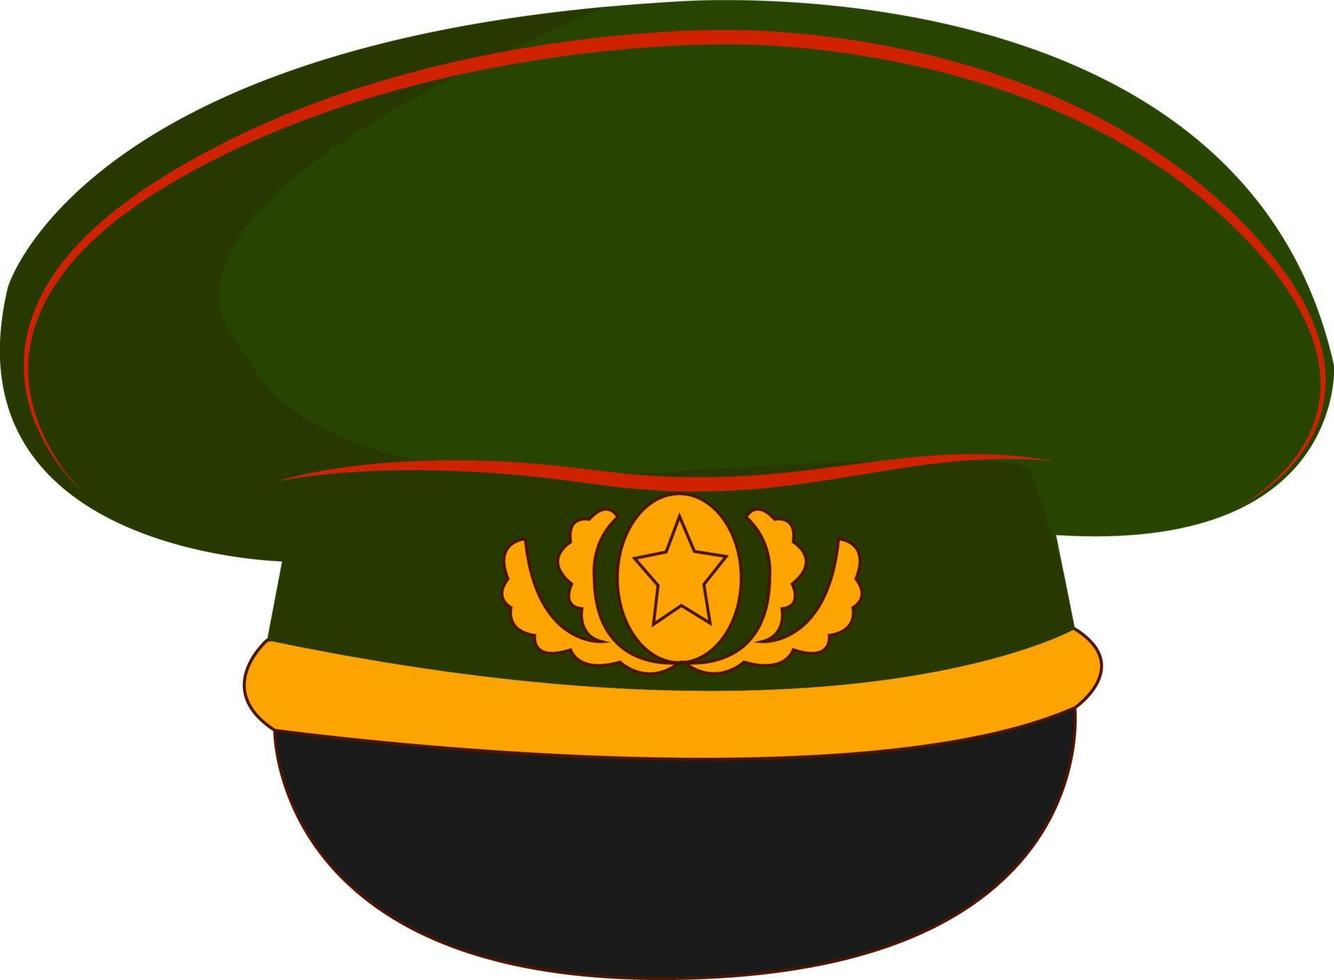 Military hat, illustration, vector on white background.